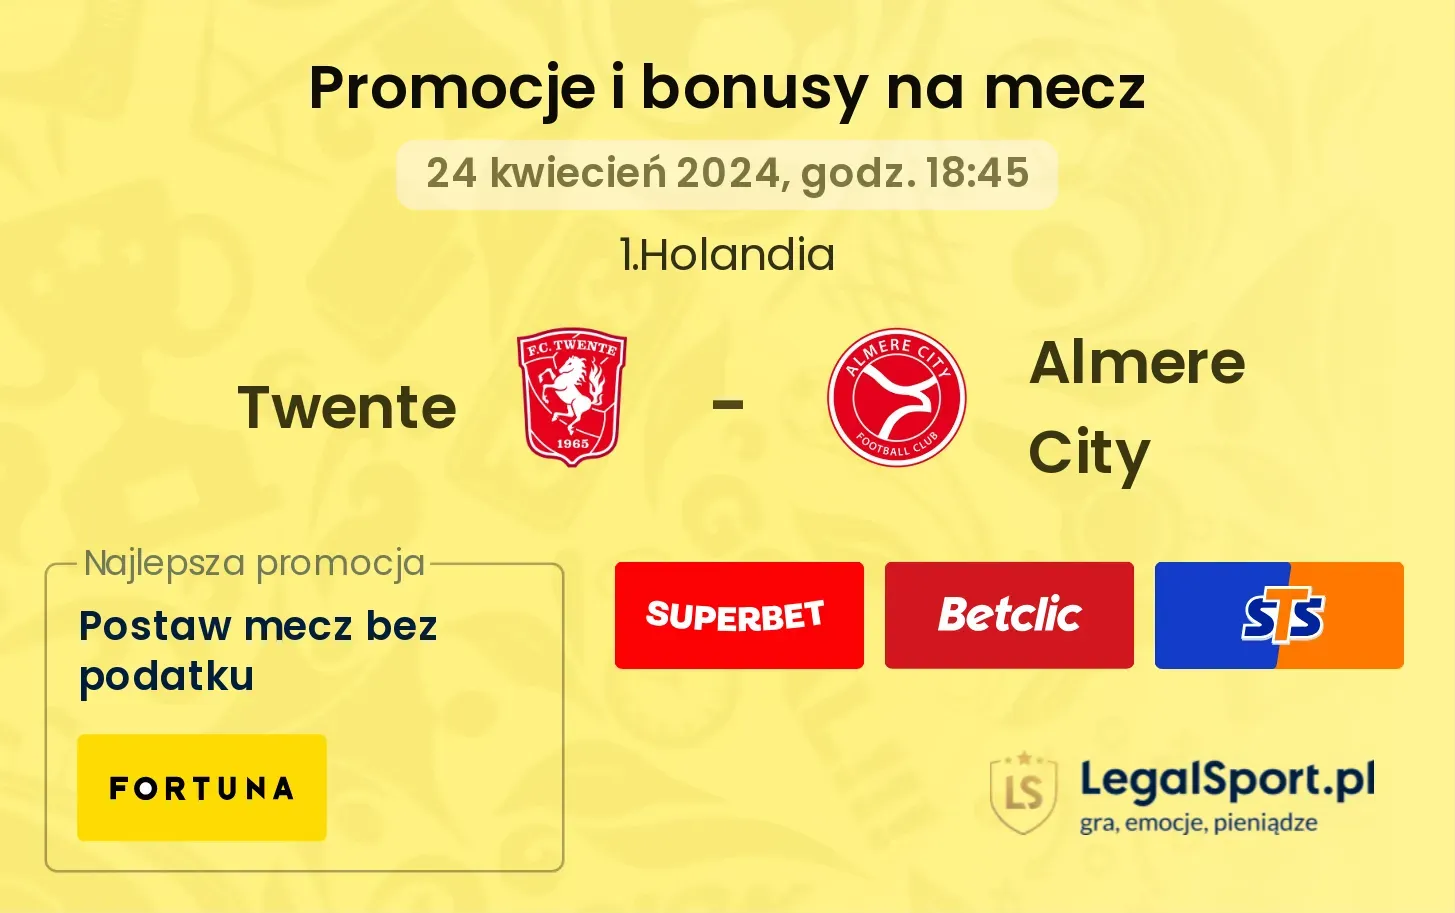 Twente - Almere City promocje bonusy na mecz